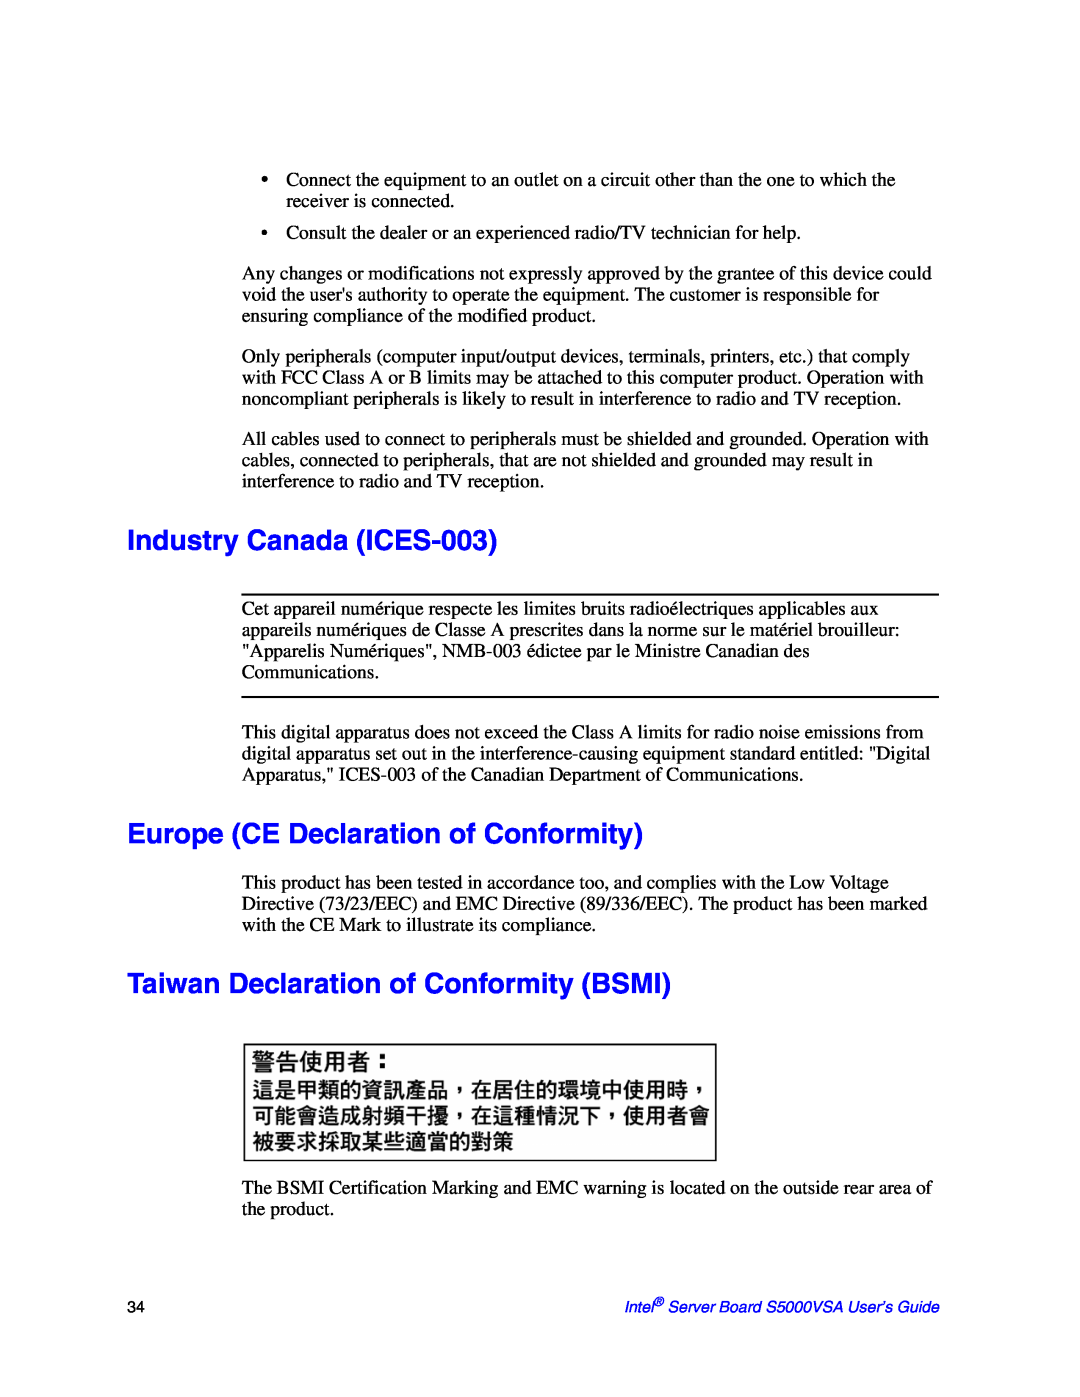 Intel S5000VSA manual Industry Canada ICES-003, Europe CE Declaration of Conformity, Taiwan Declaration of Conformity BSMI 